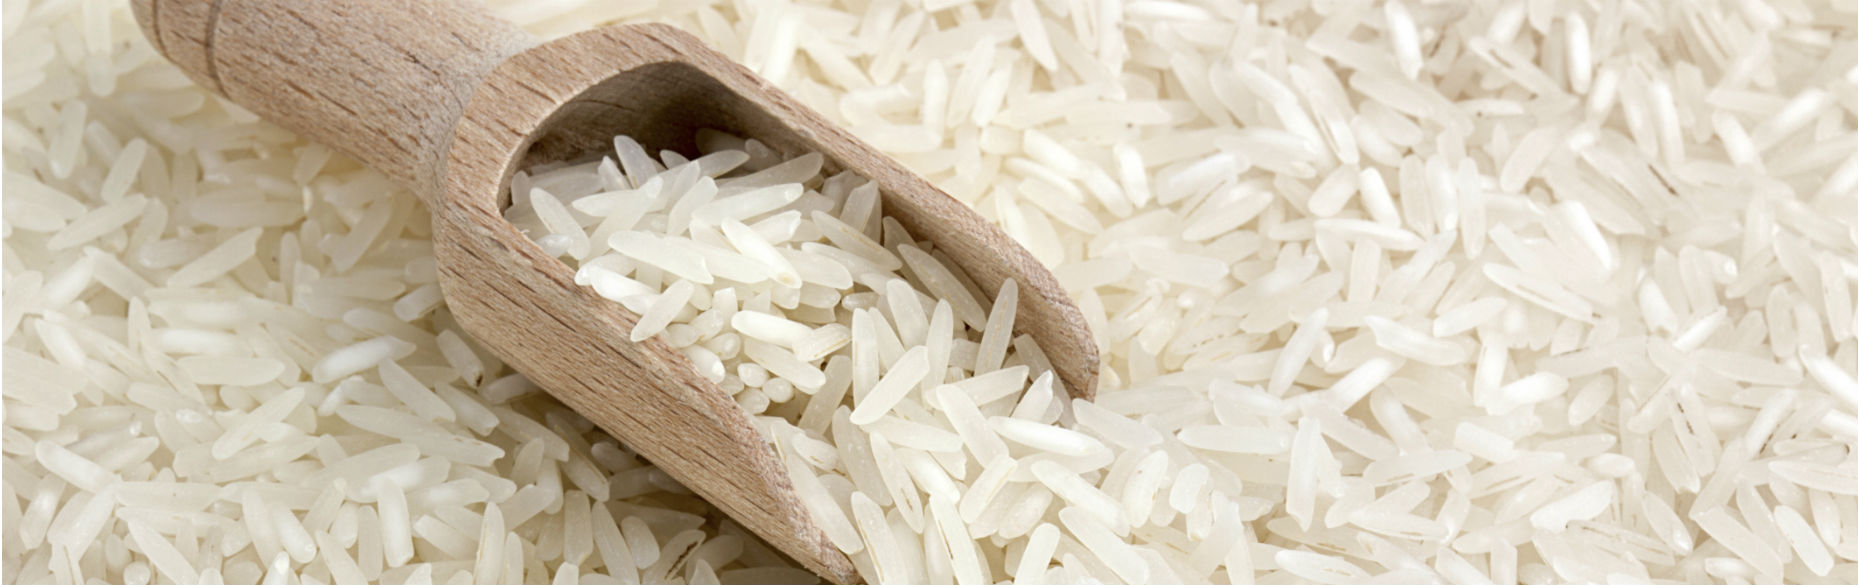 Rice image